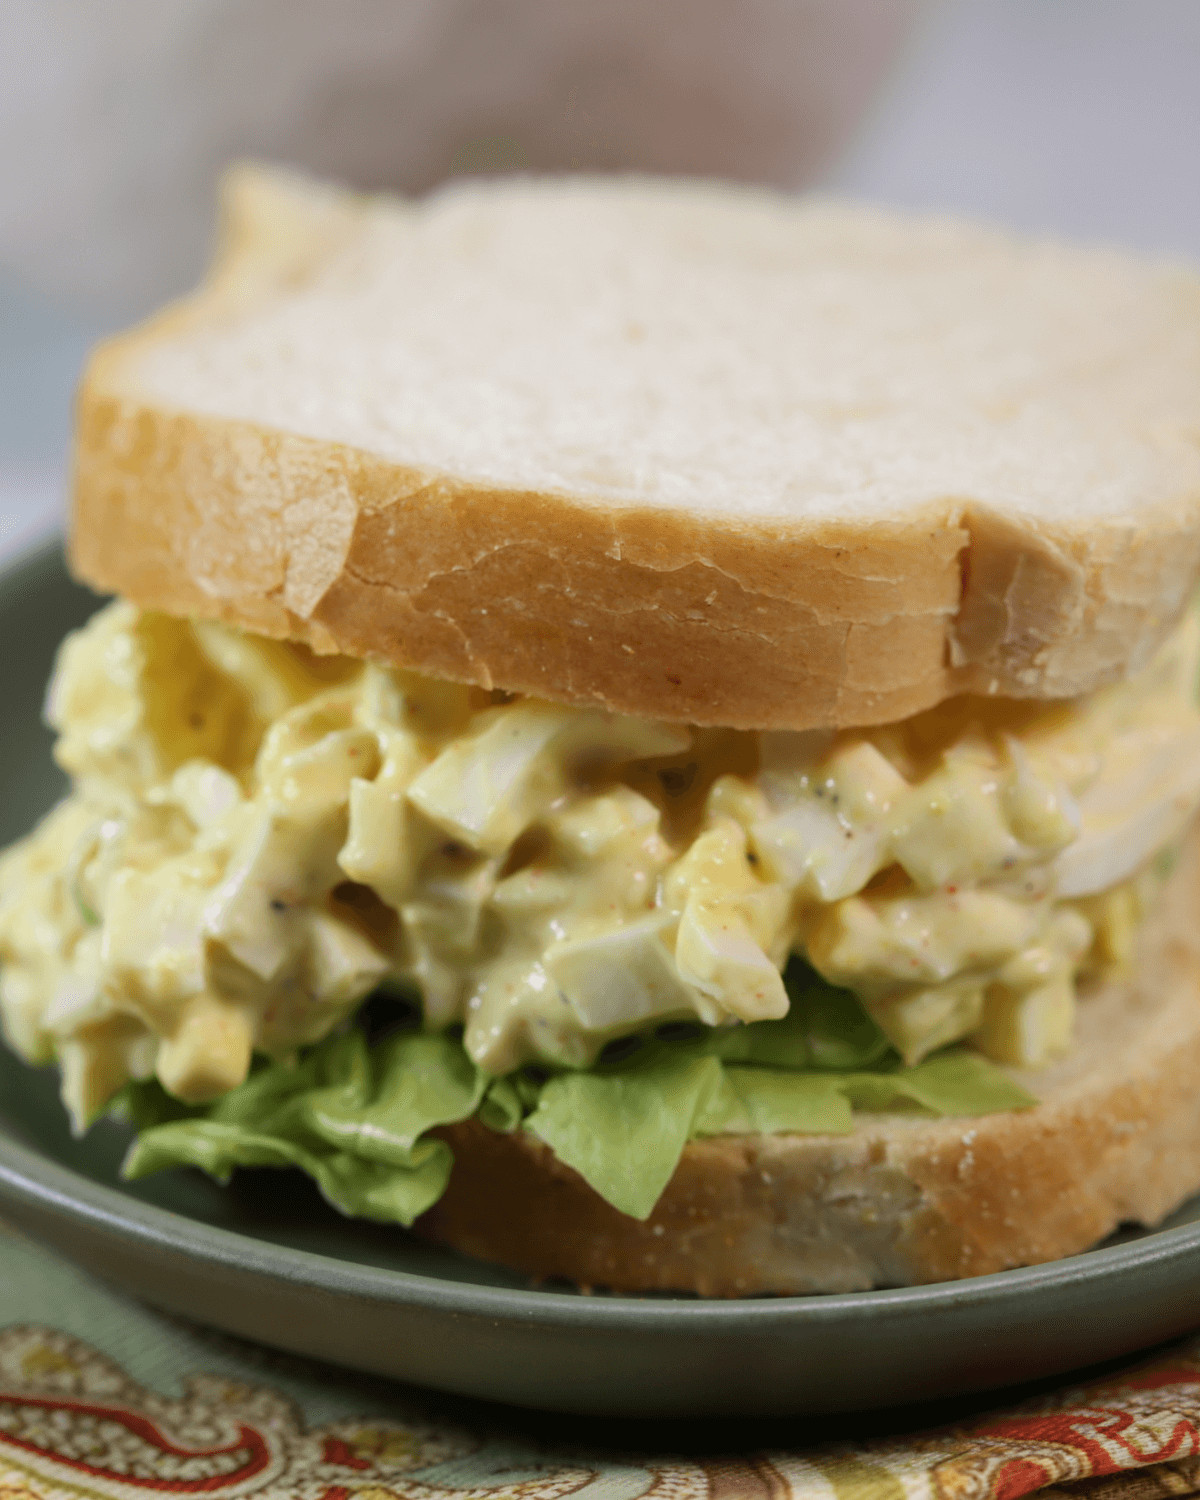 A southern egg salad sandwich.